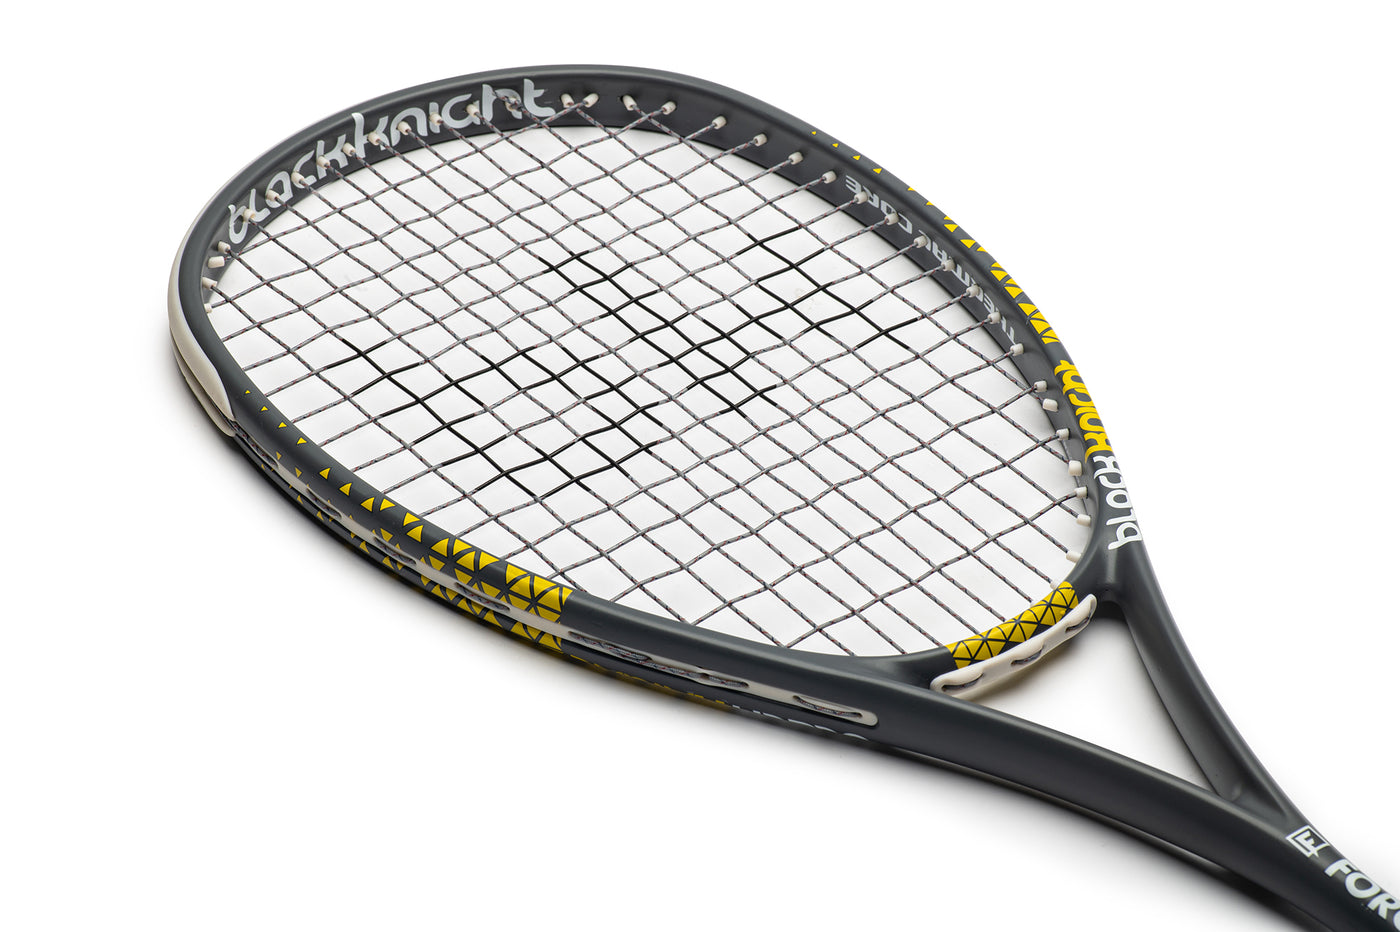 *NEW* Force TI Squash Racquet